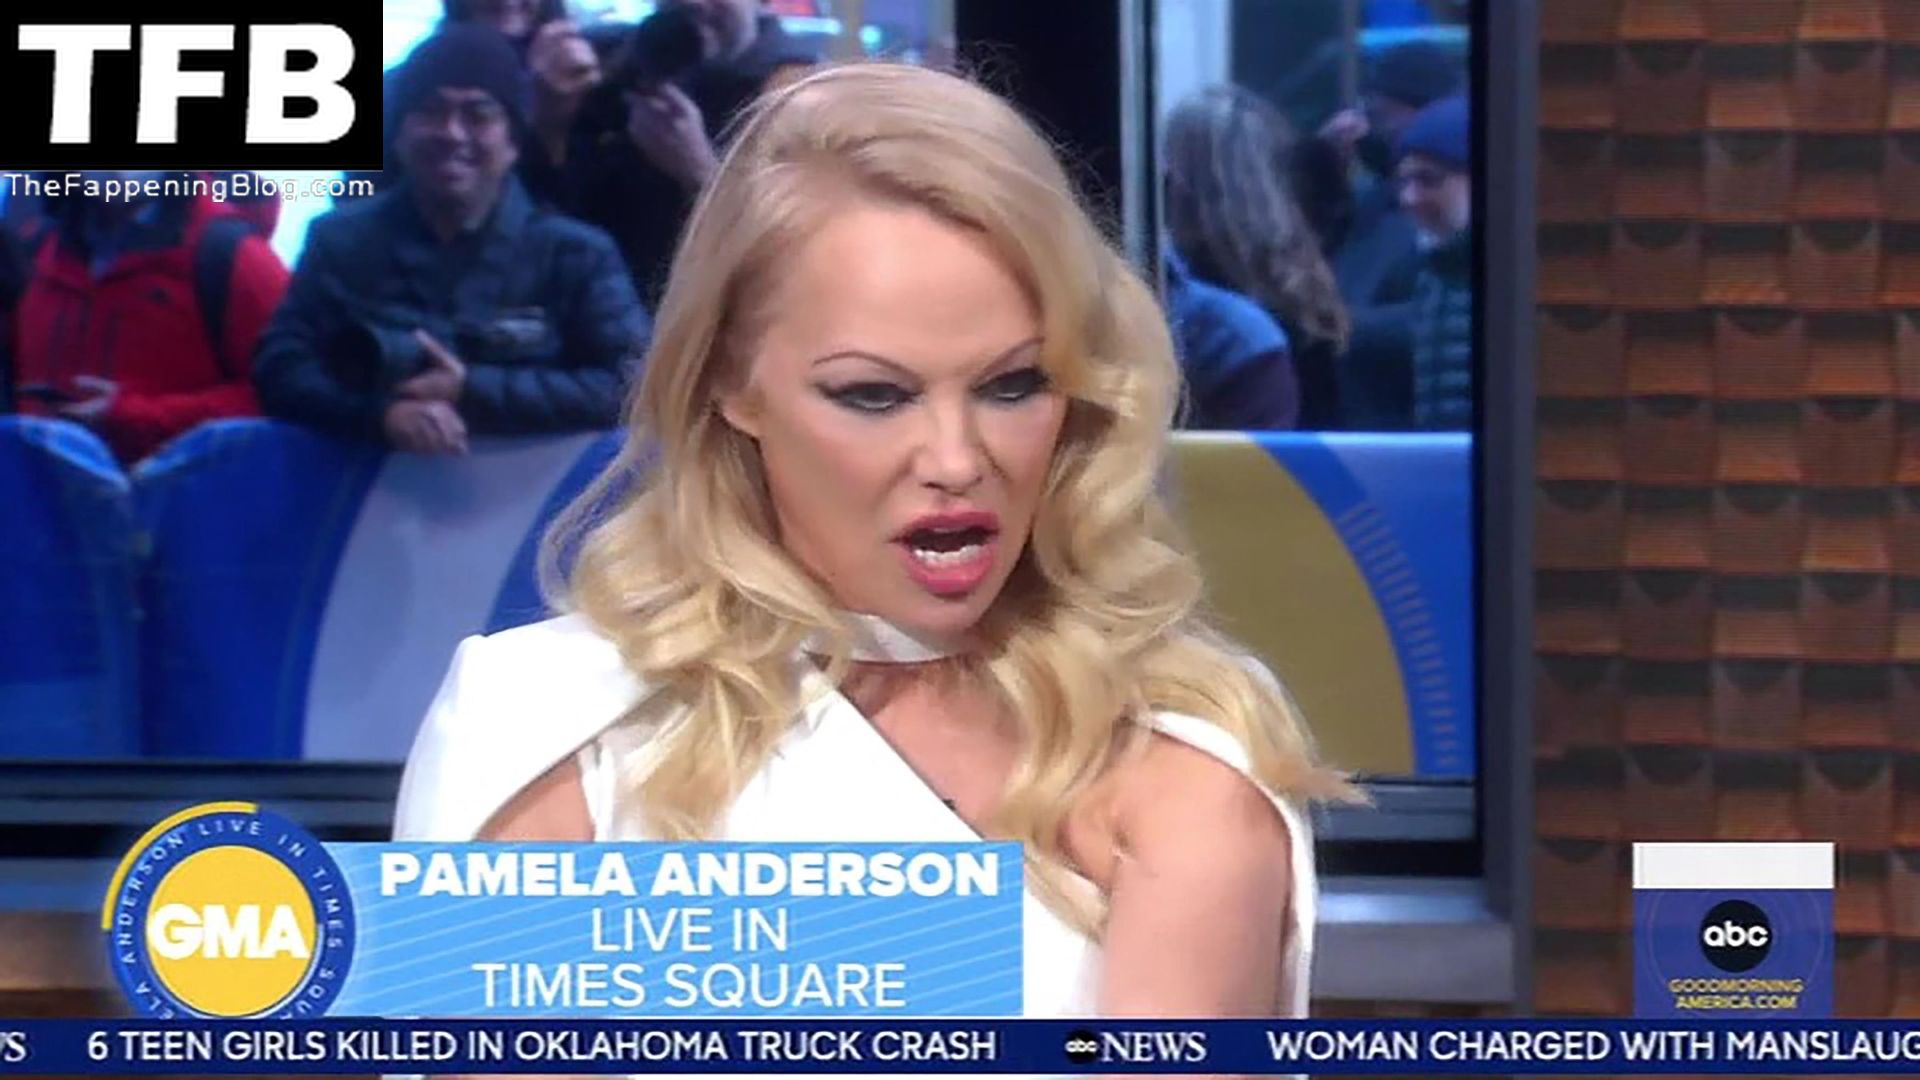 Pamela-Anderson-Hot-The-Fappening-Blog-10.jpg